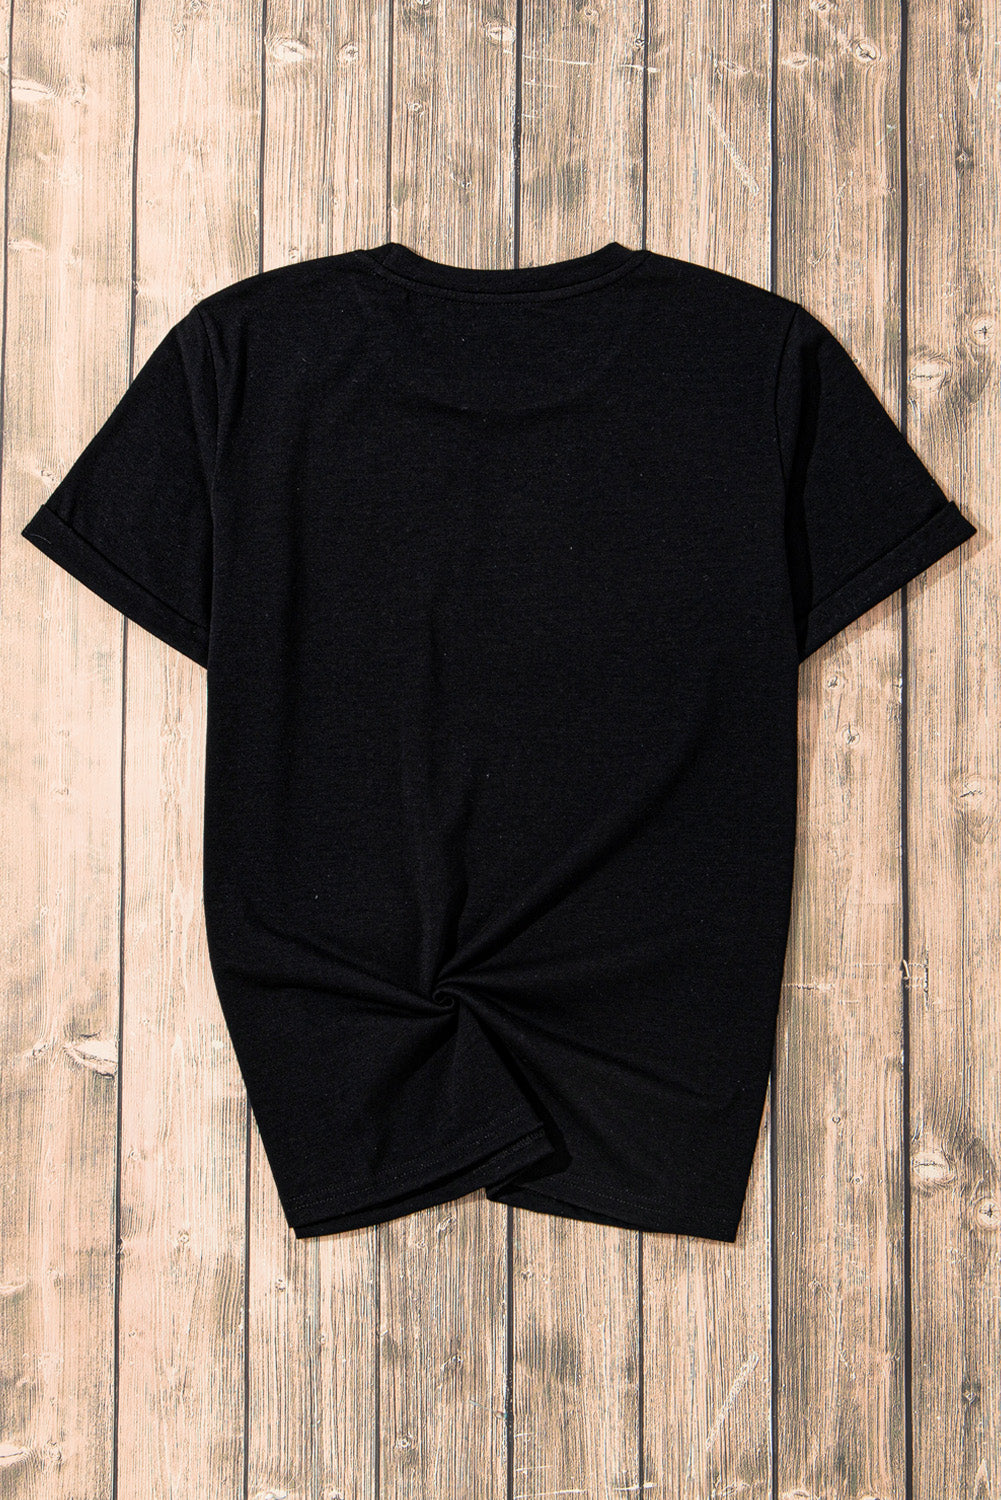 Black Rhinestone Be Kind Graphic T Shirt